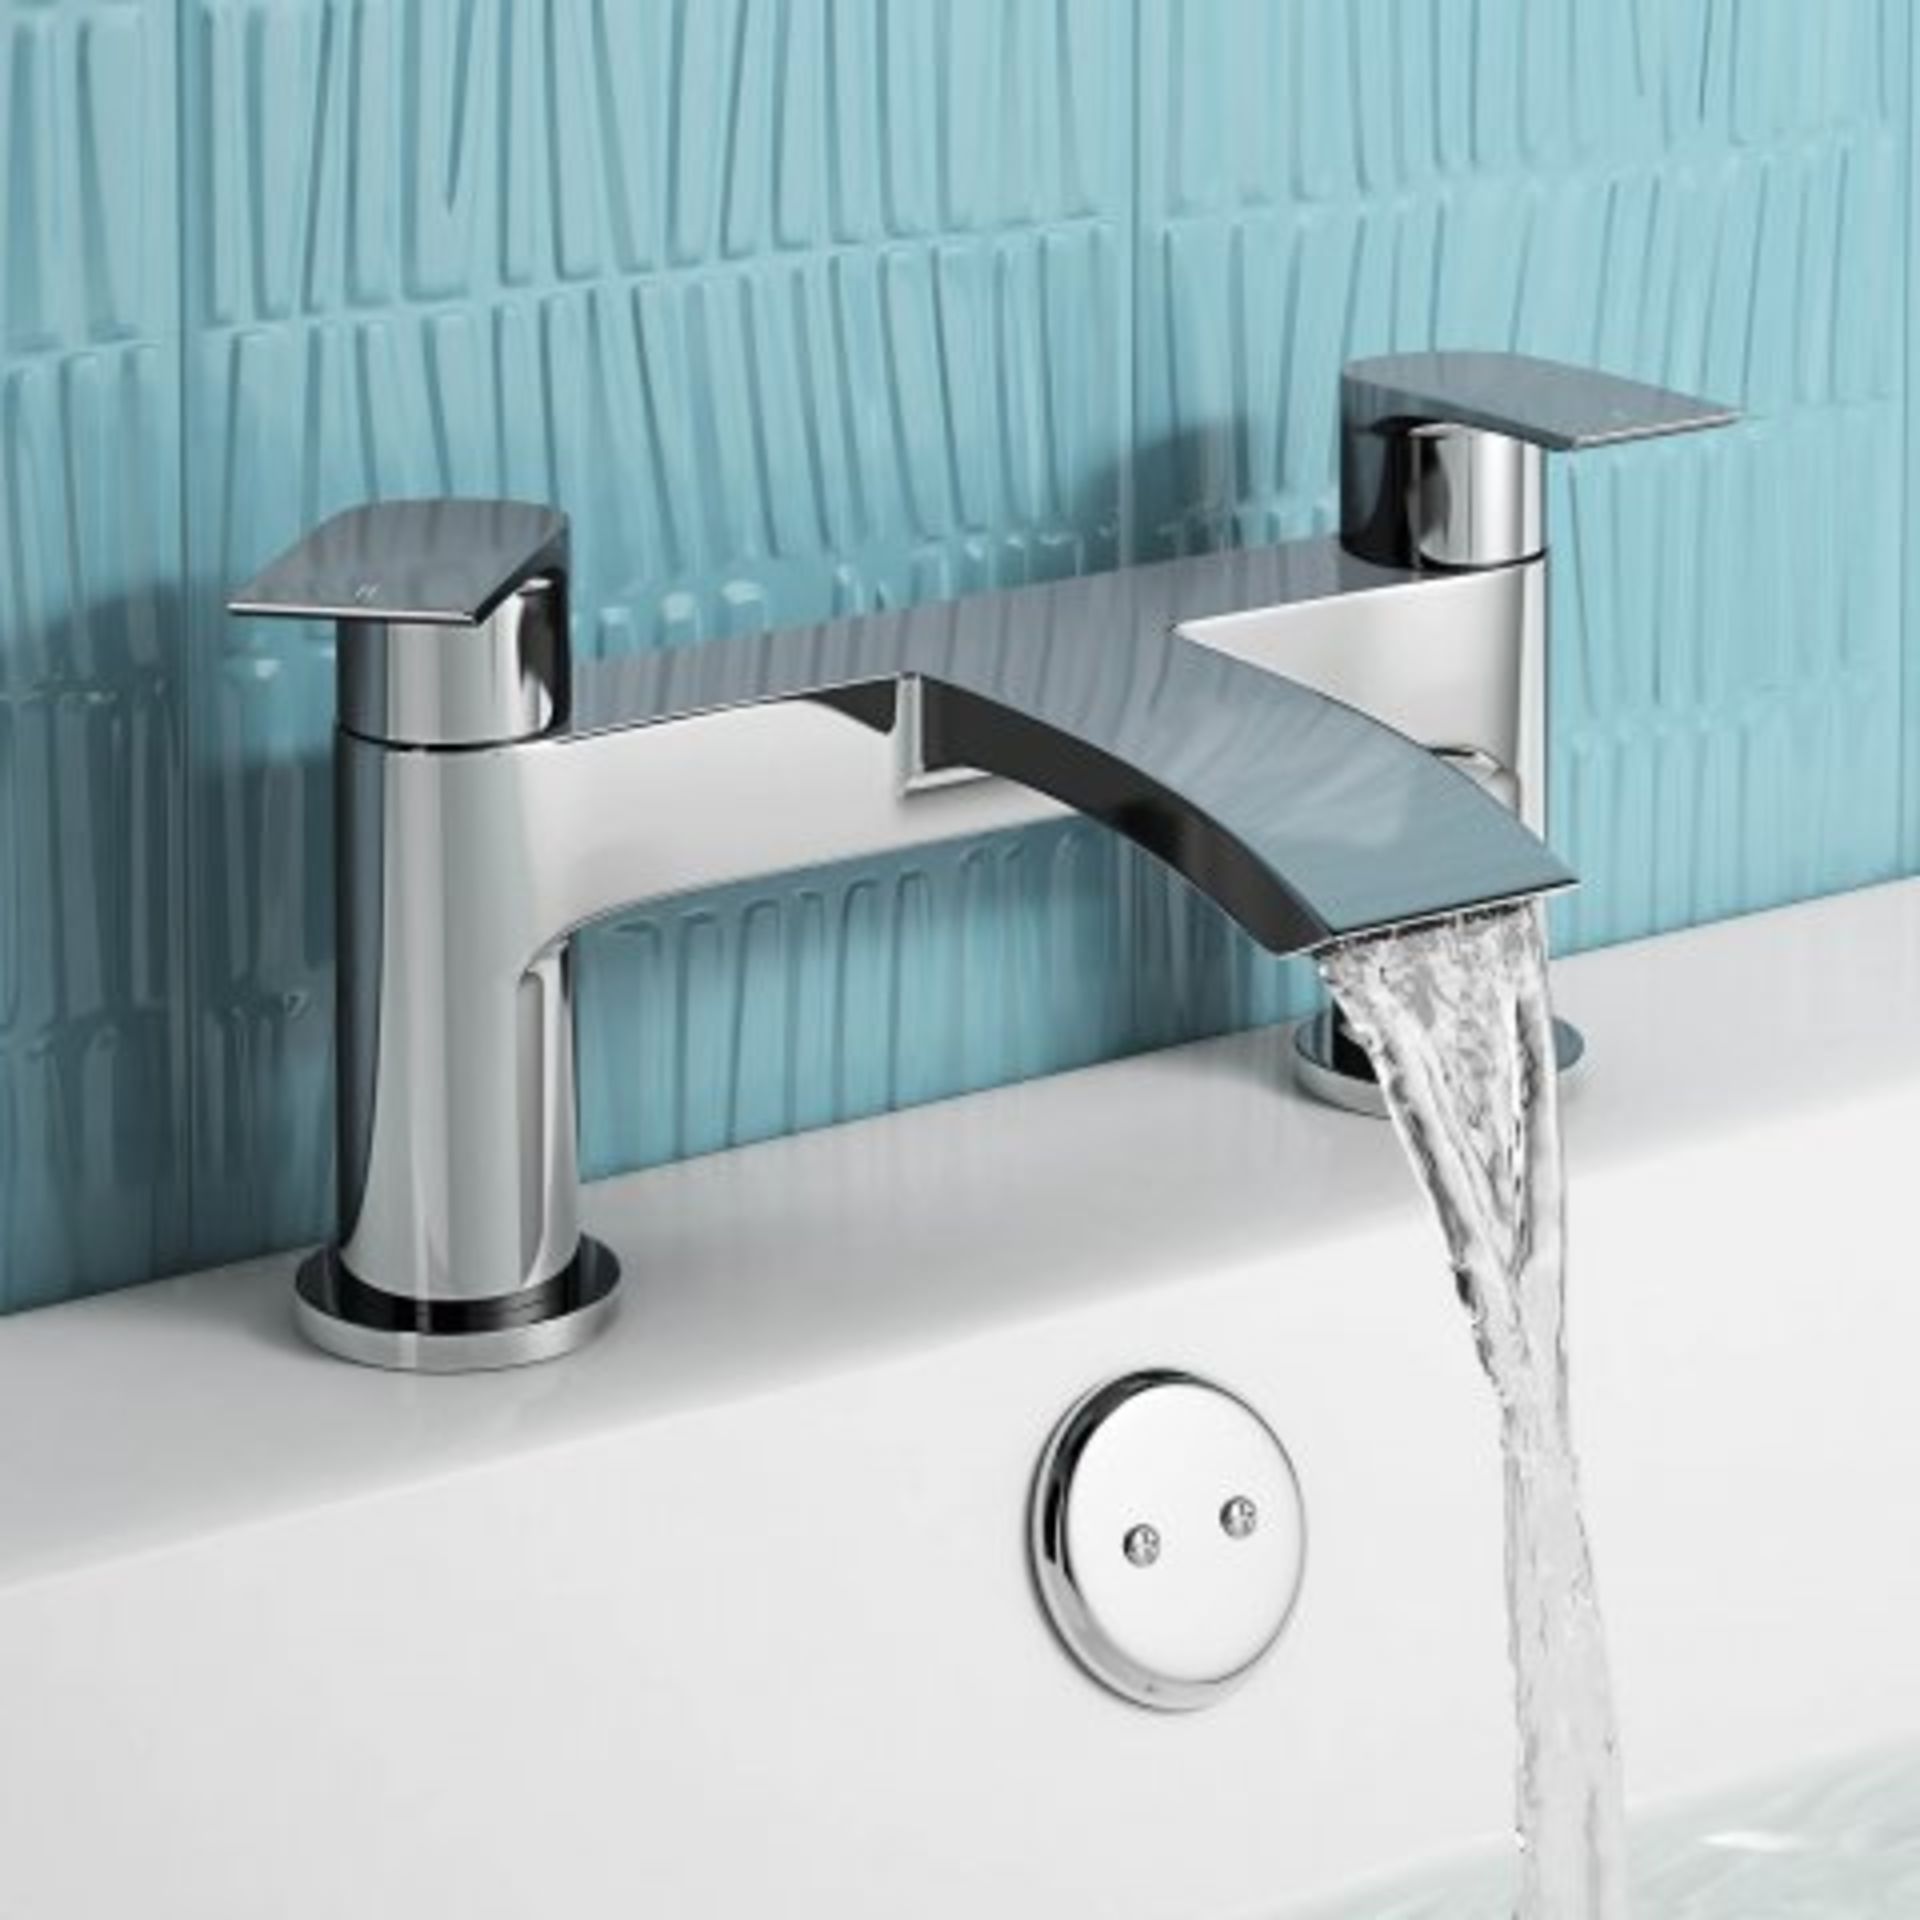 (W237) Nelas Bath Filler Mixer Tap Modern Bathroom Tap : Presenting a graceful design this